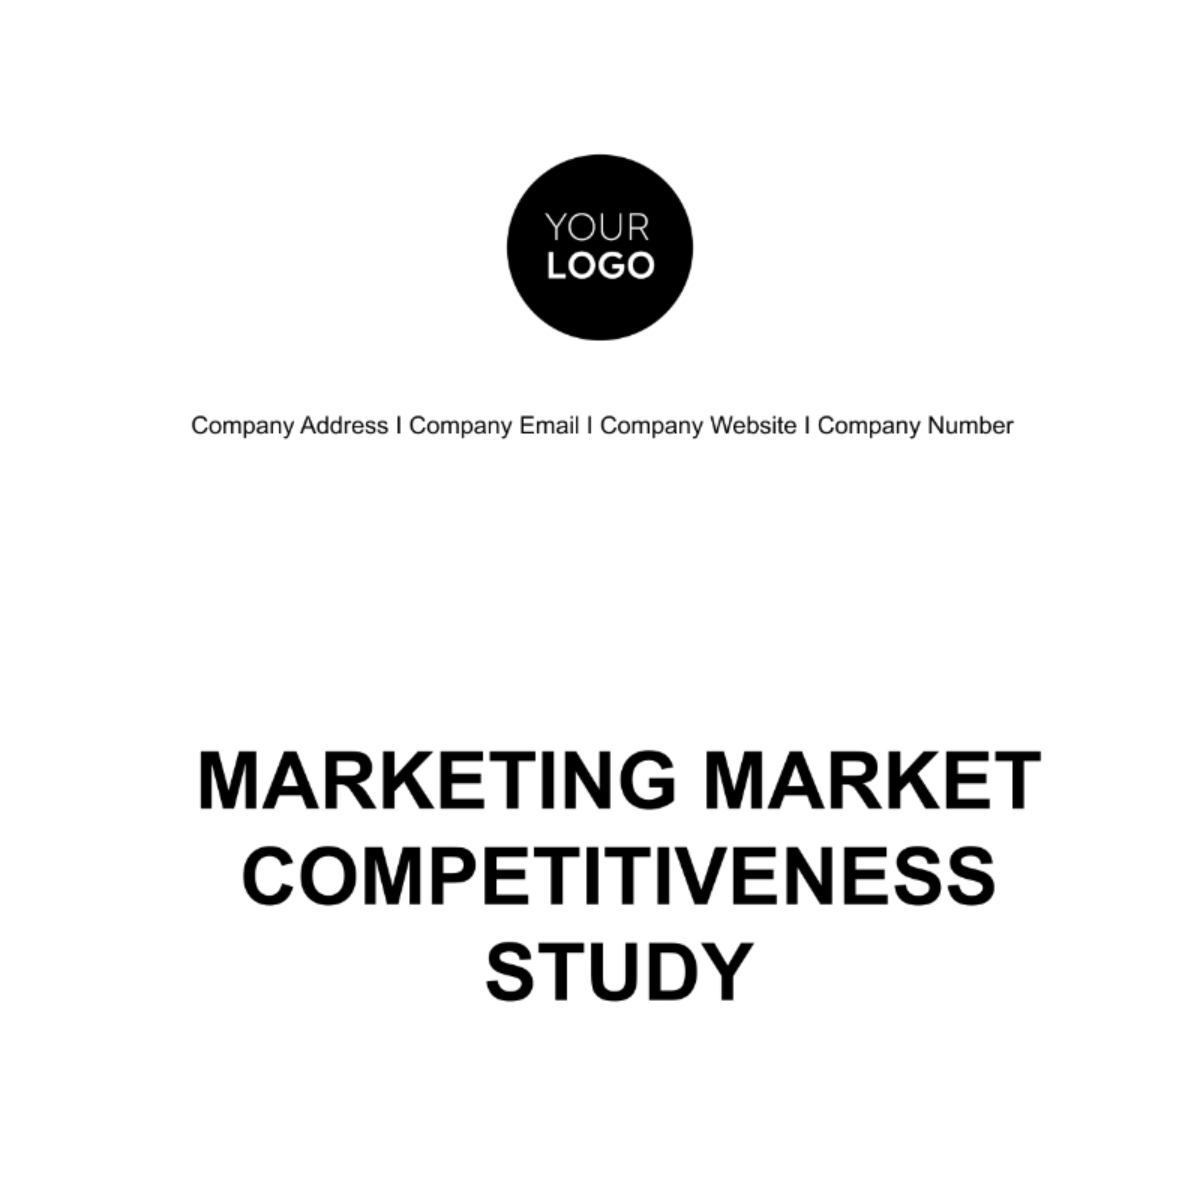 Marketing Market Competitiveness Study Template